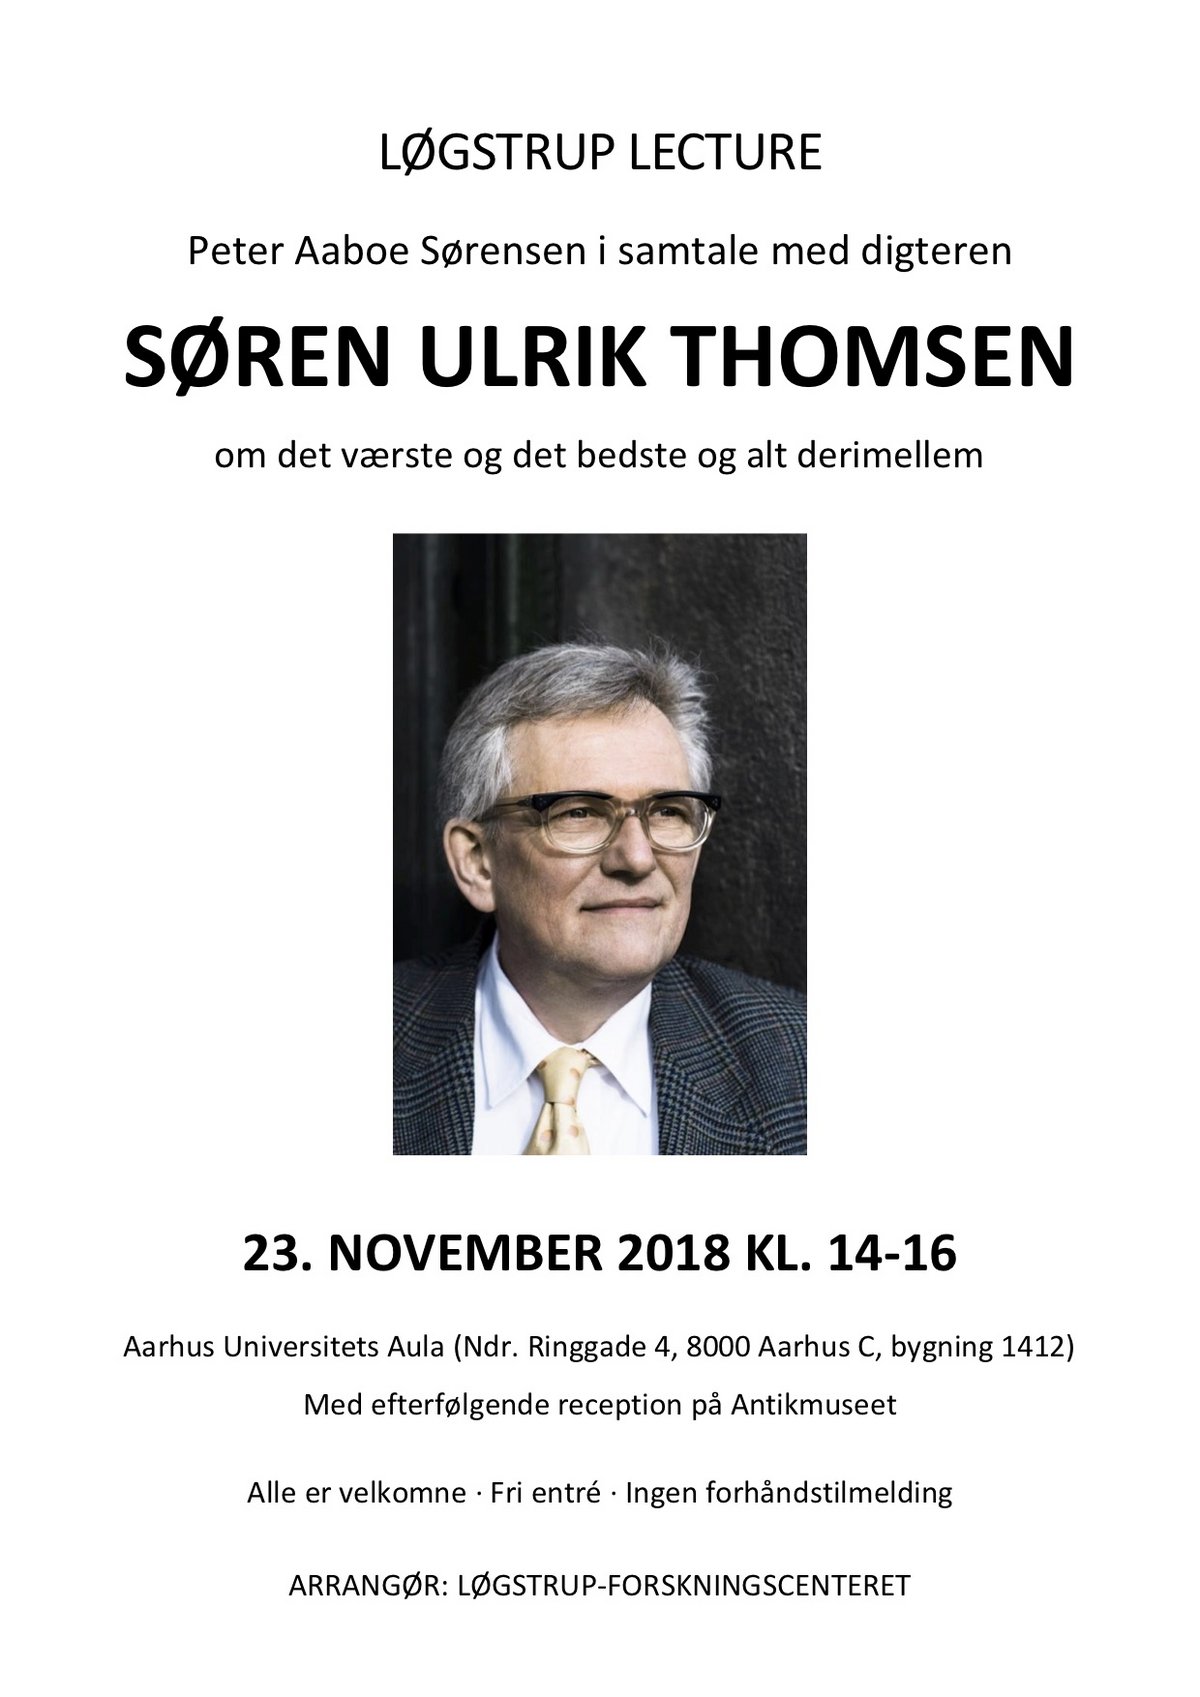 Løgstrup Lecture 2018: Søren Ulrik Thomsen